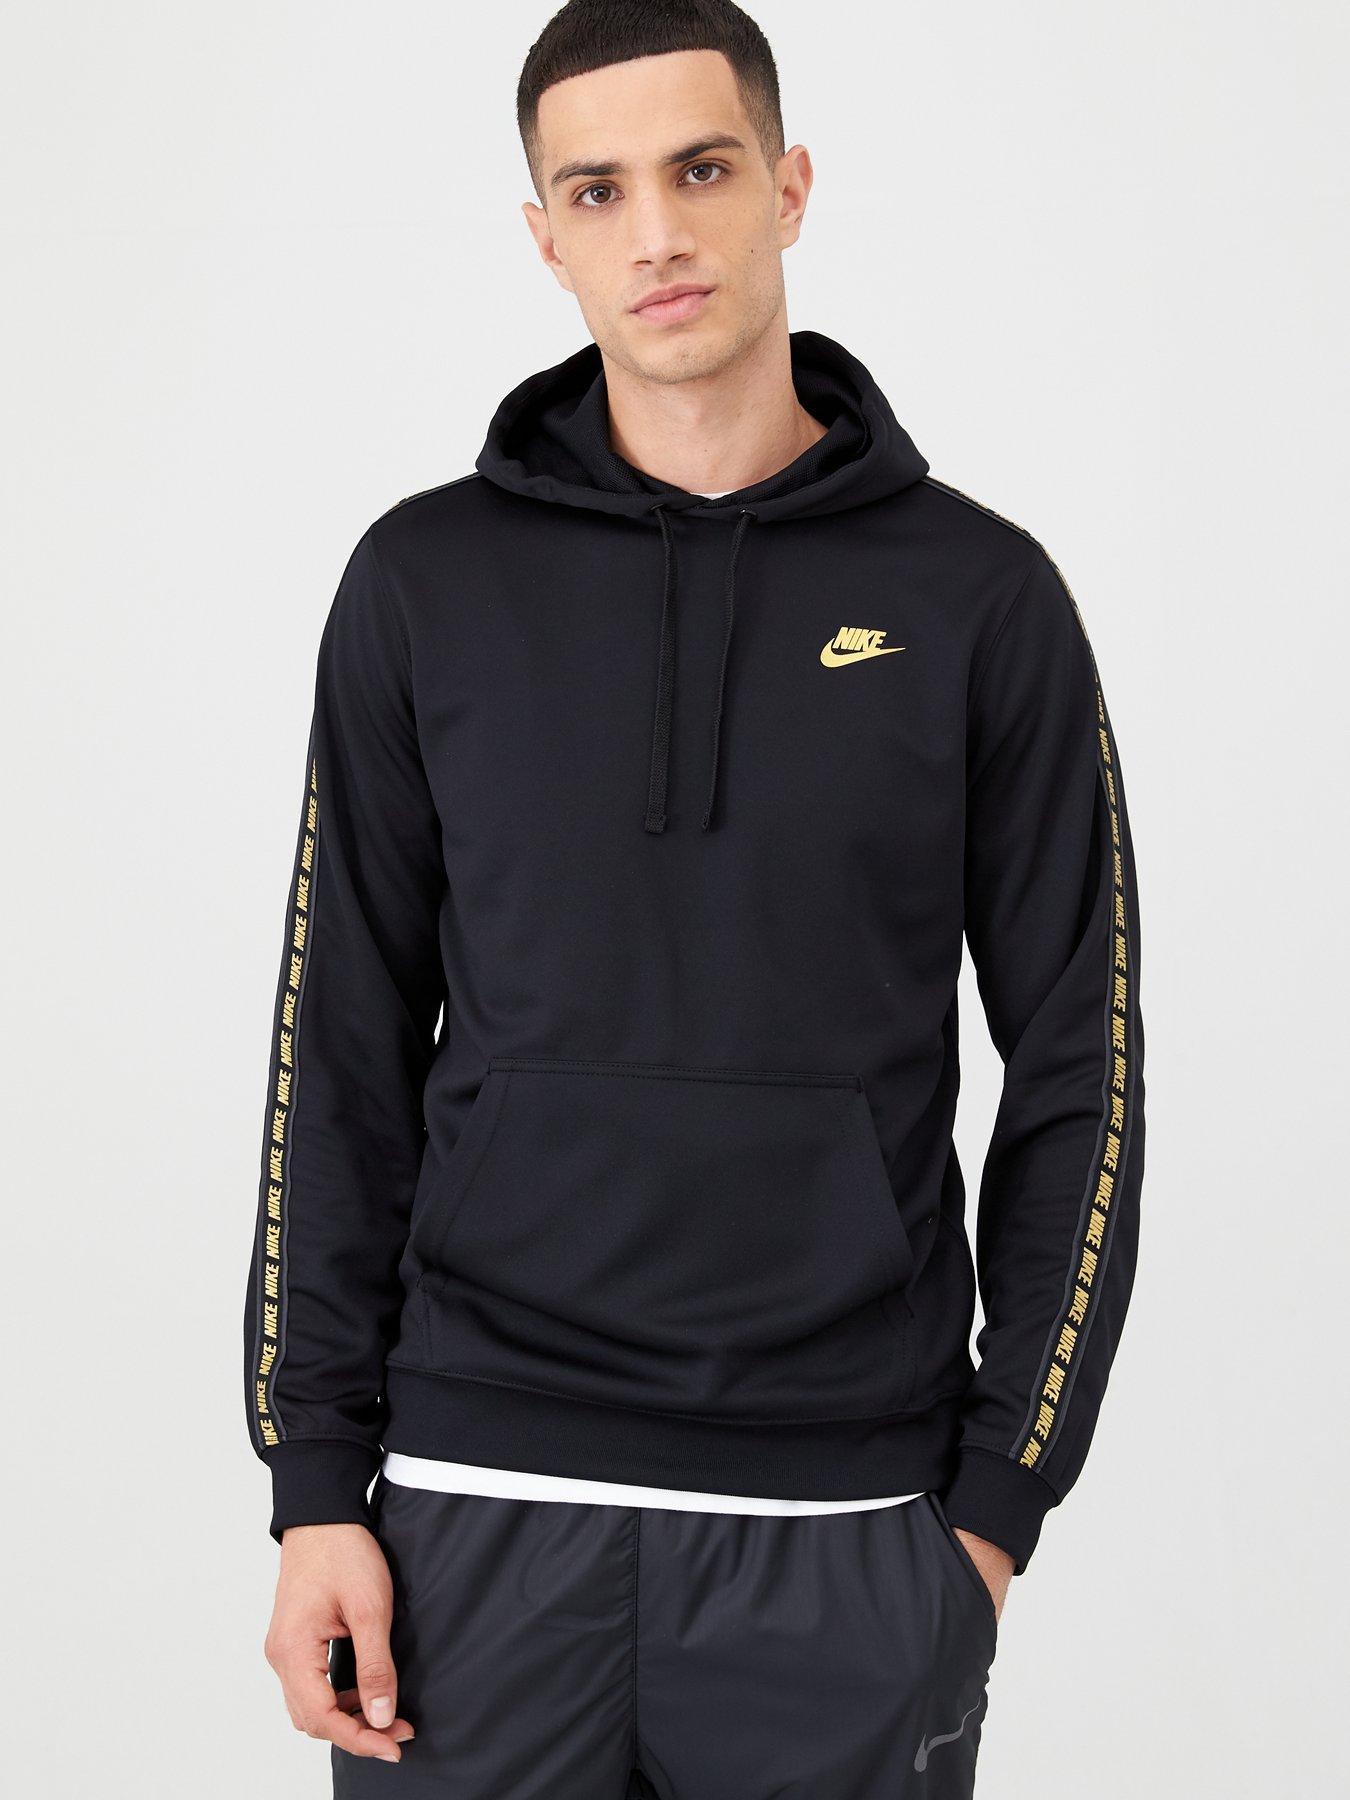 black and gold nike hoodie